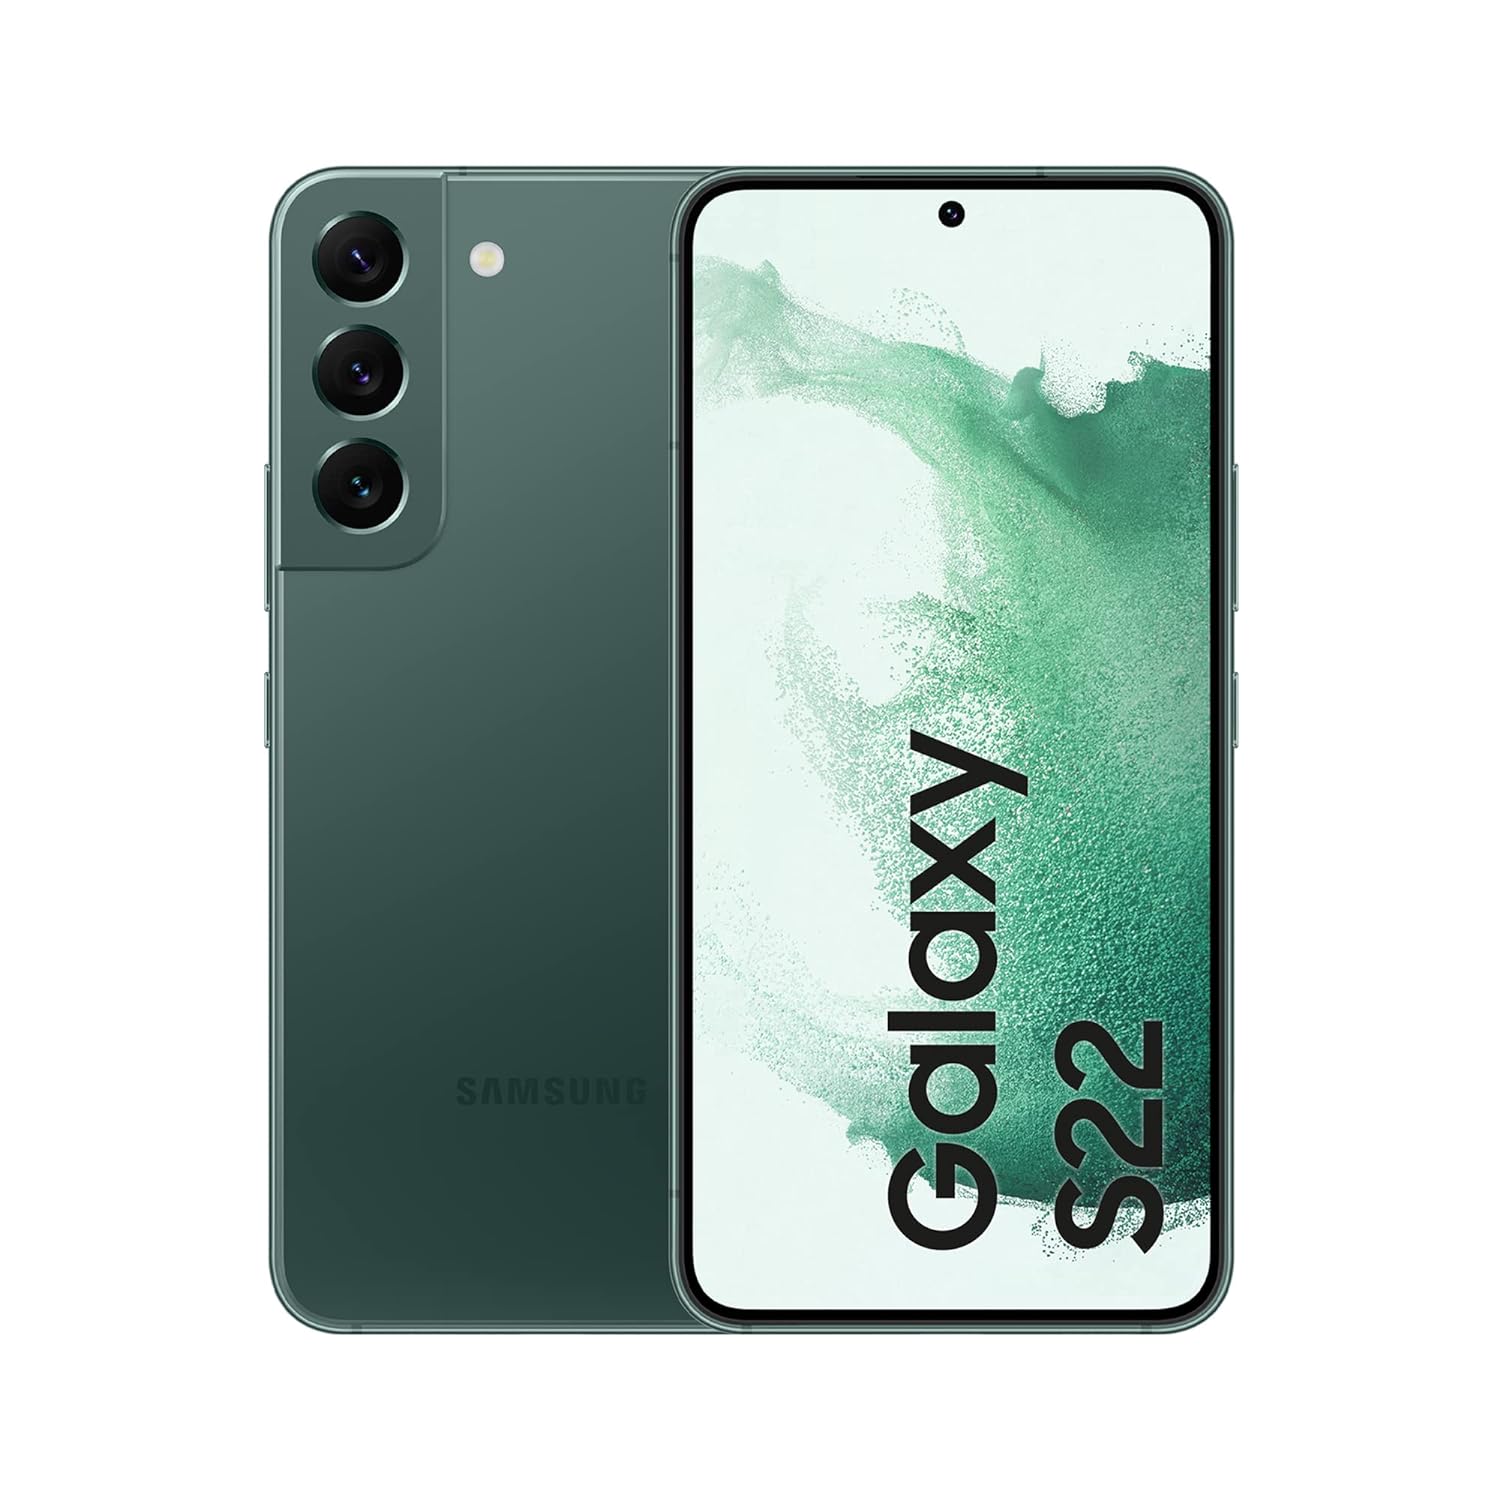 Samsung Galaxy S22 5G Green 128 GB